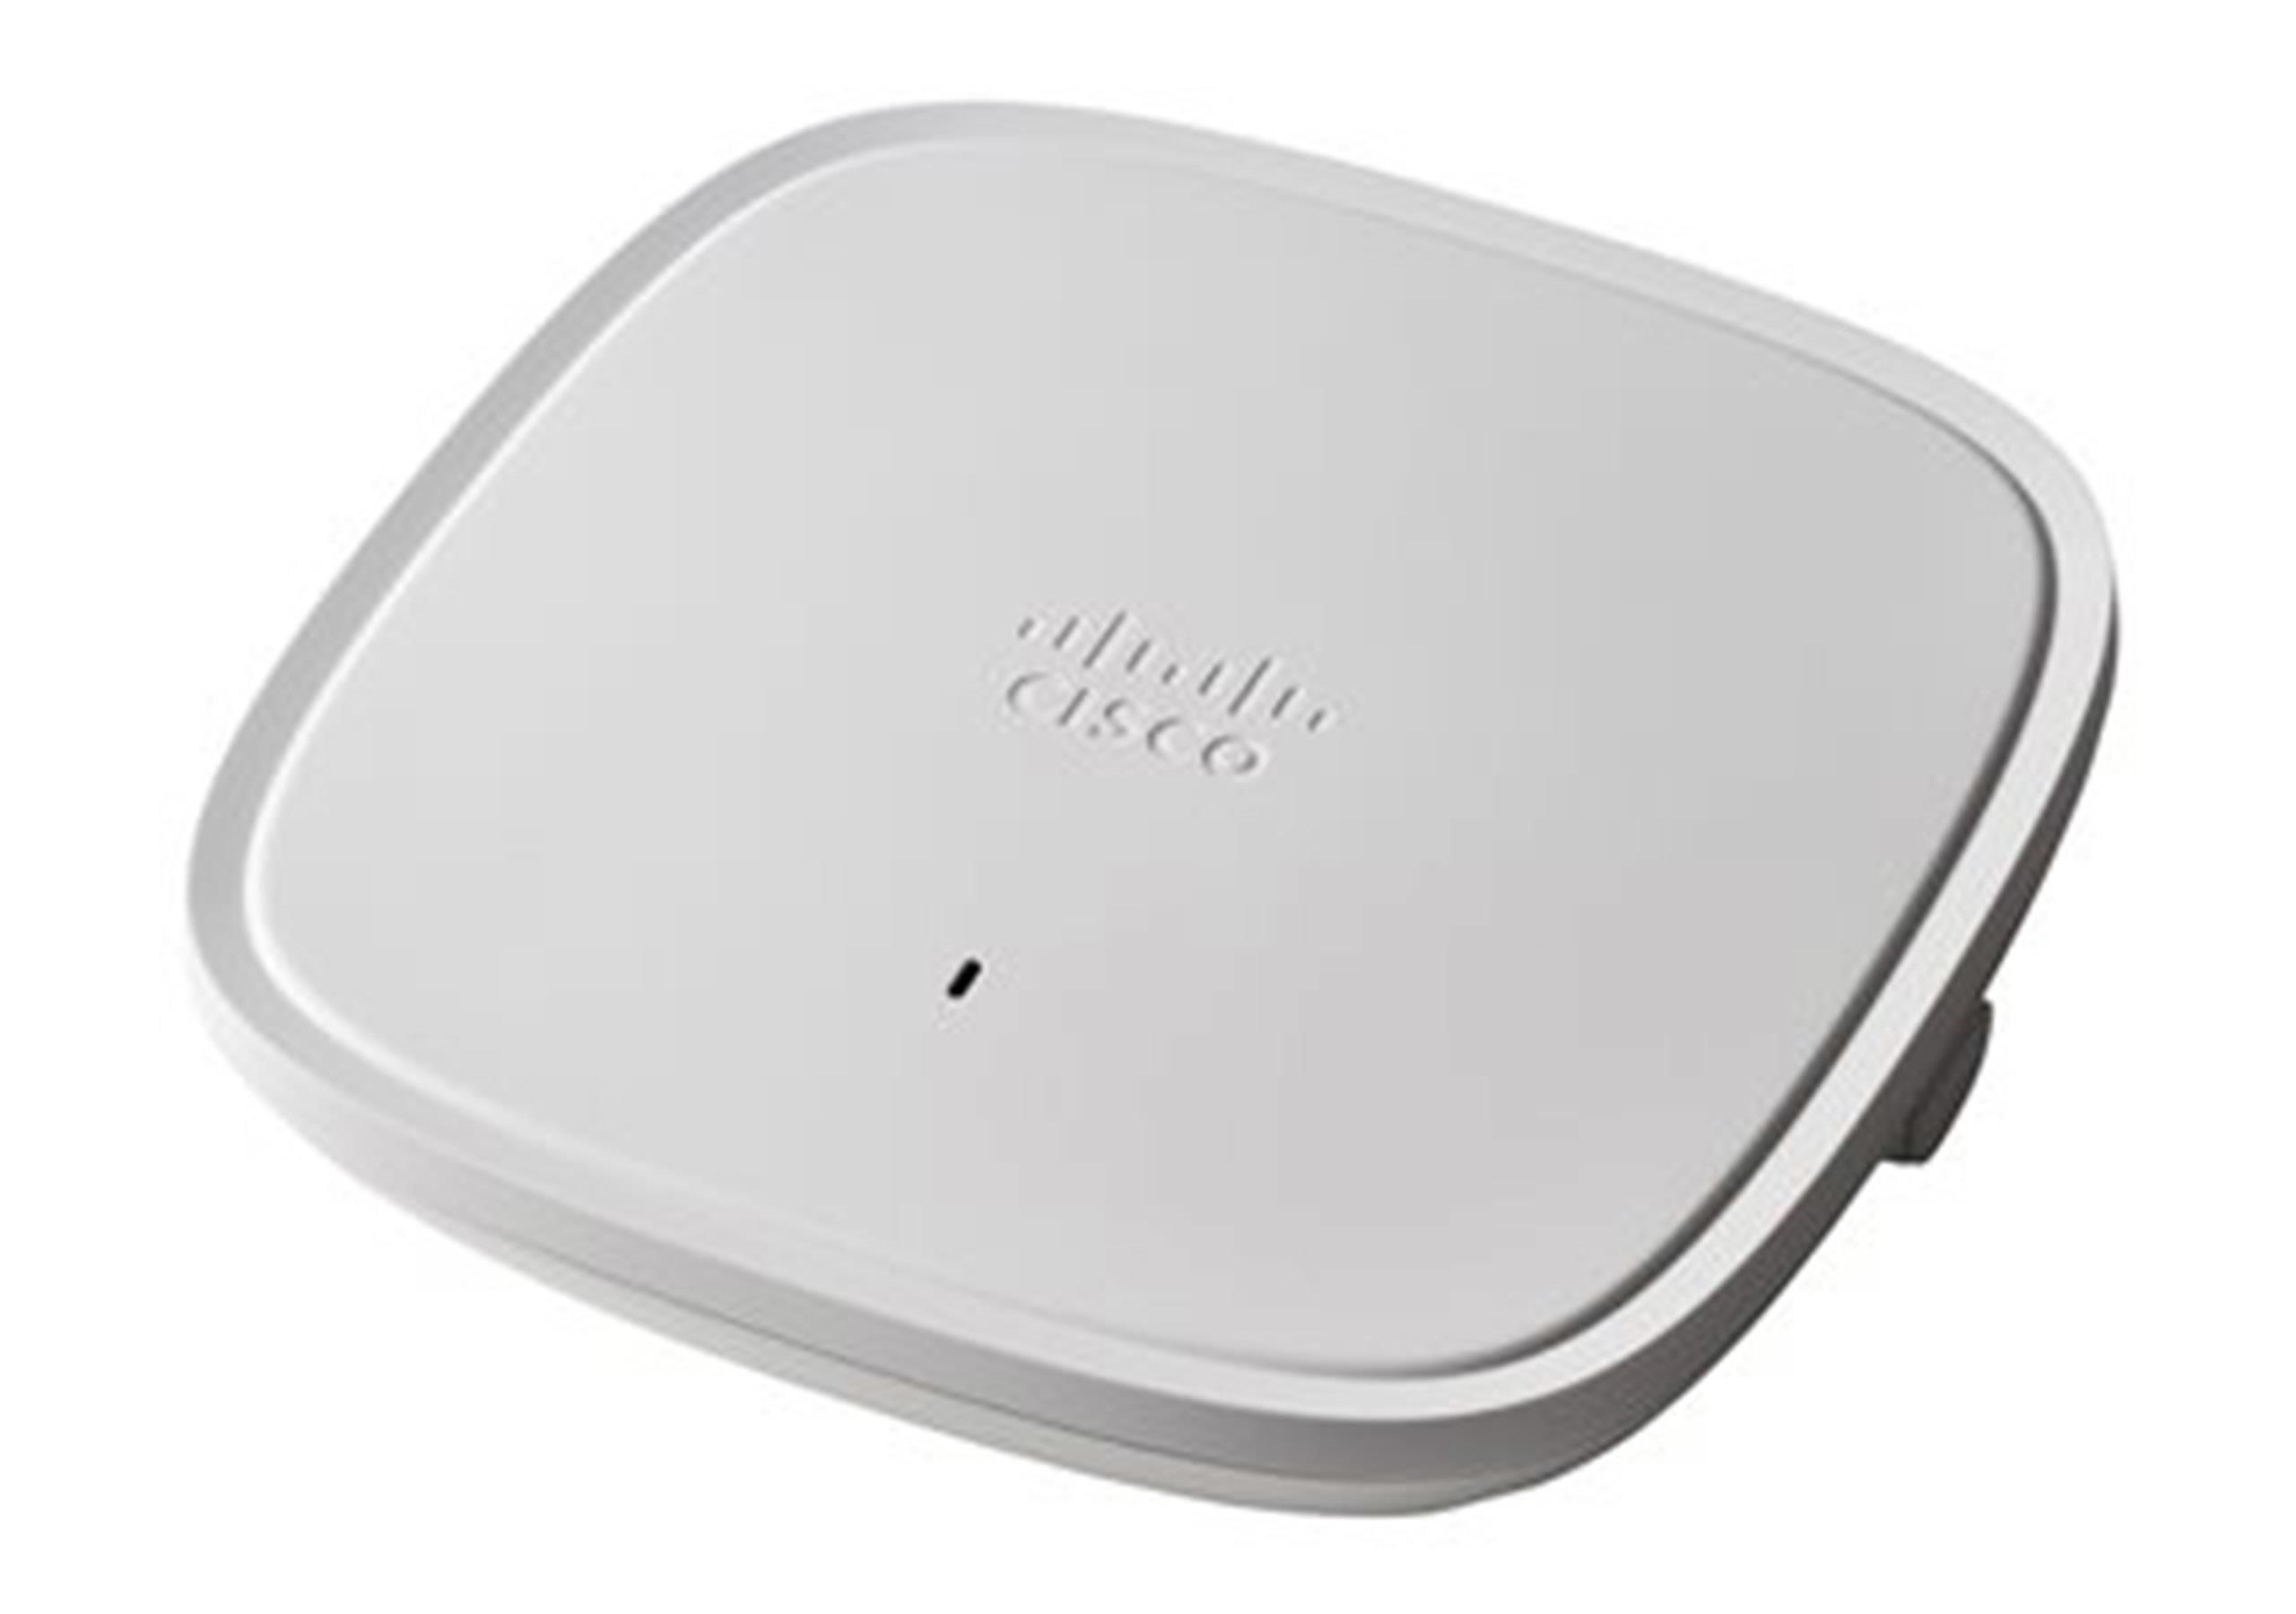 Cisco 9115 Wireless Access